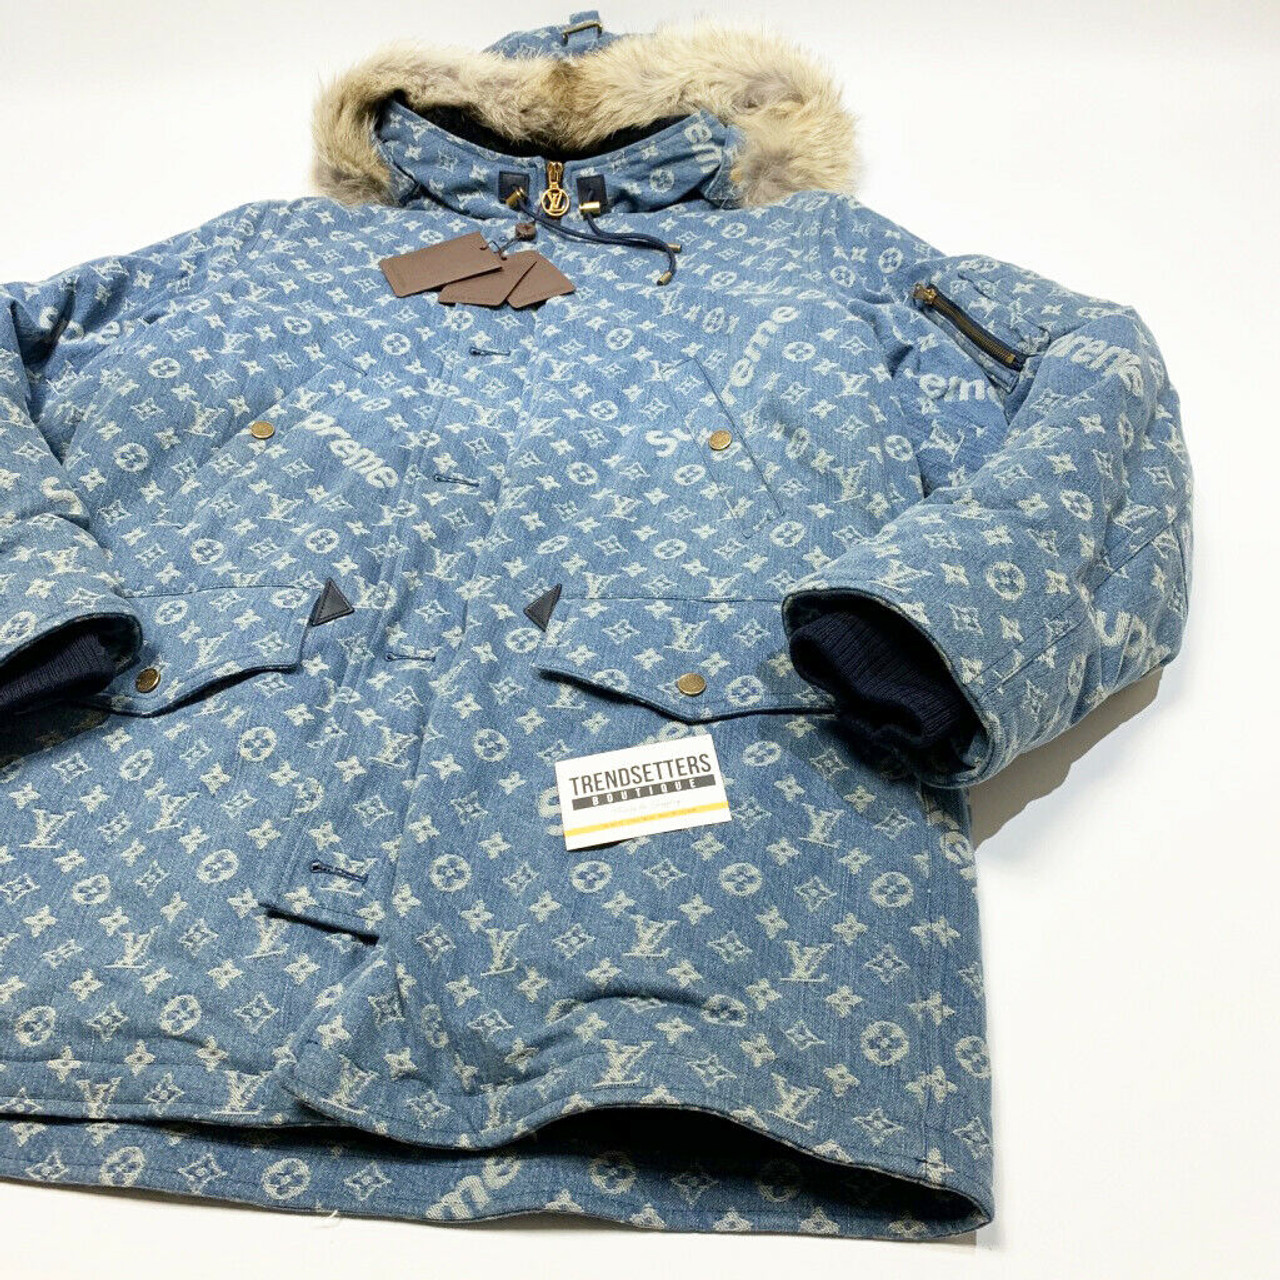 LV-Supreme jacket coat 12009# size:M-3XL, Mr. Chen Blog